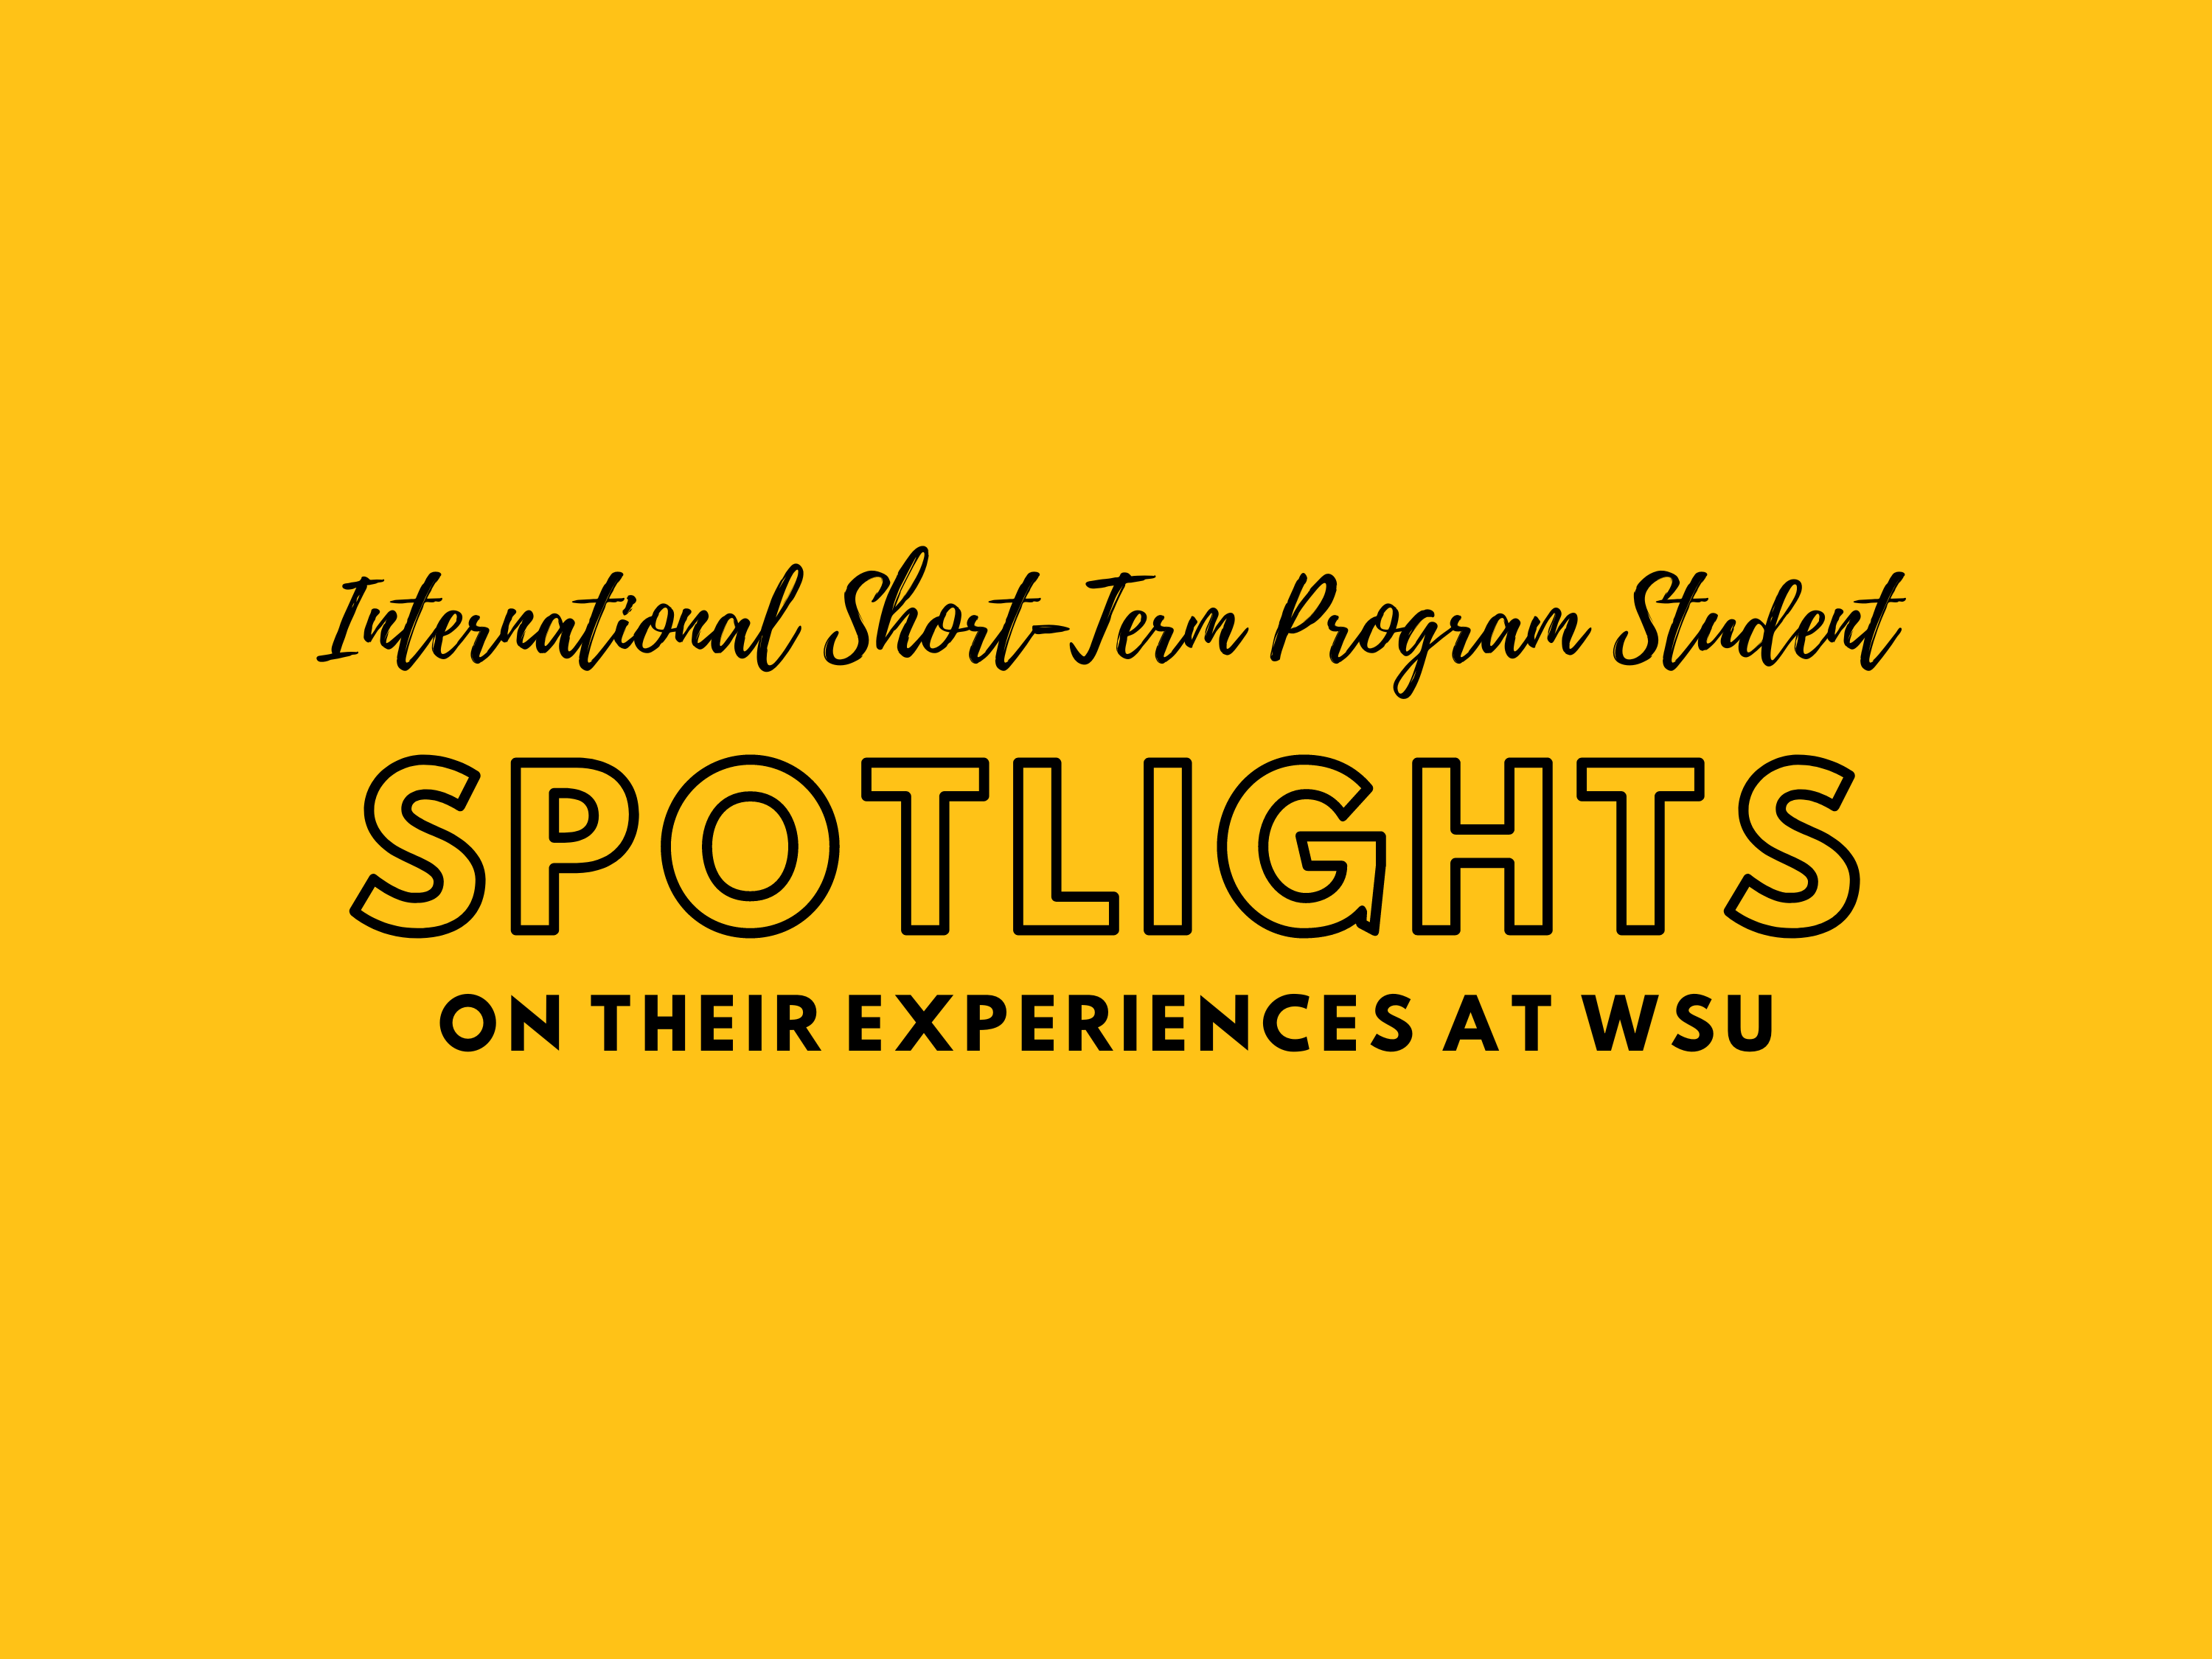 International Short-Term Program Student Spotlights on their experiences at WSU